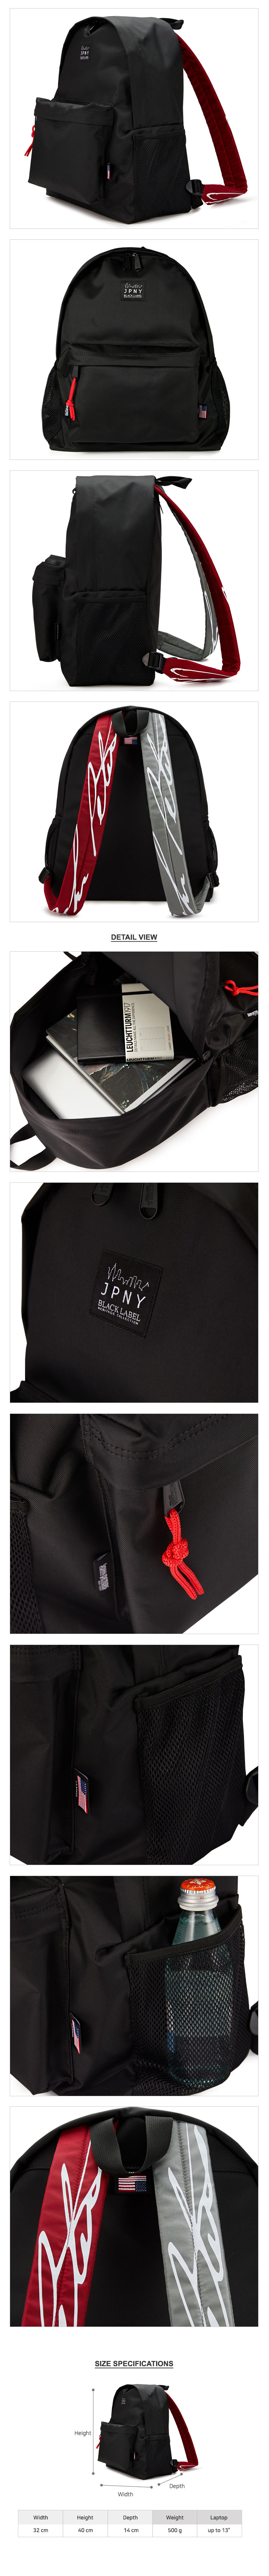 JPNY 1112 Backpack Black (Red+Gray)